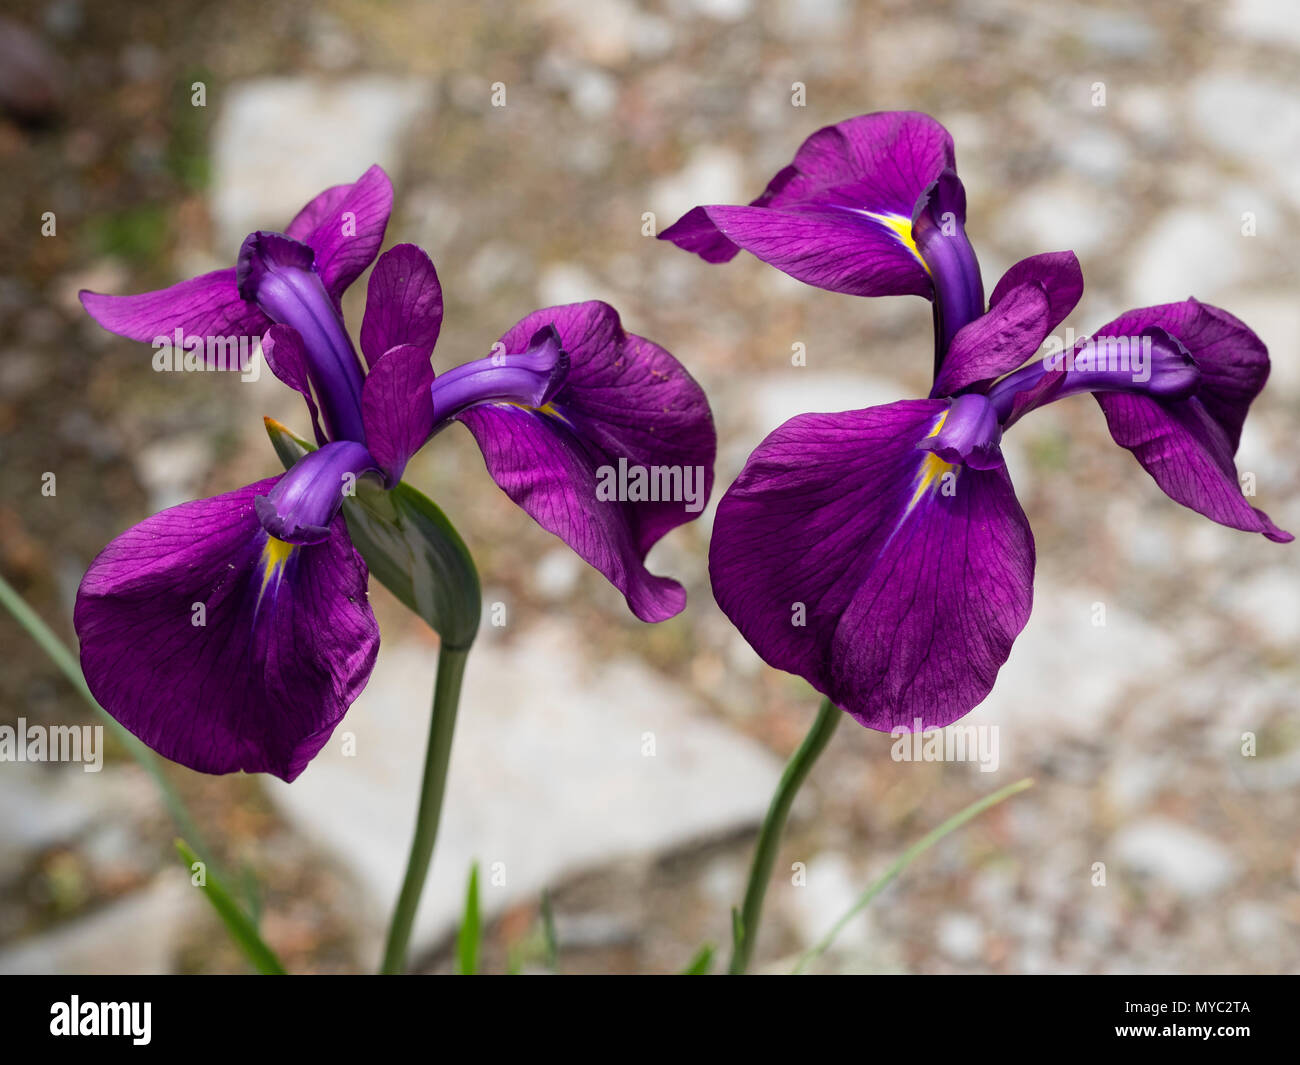 Red-purple early summer flowers of the hardy Japanese iris, Iris ensata 'Variegata' Stock Photo